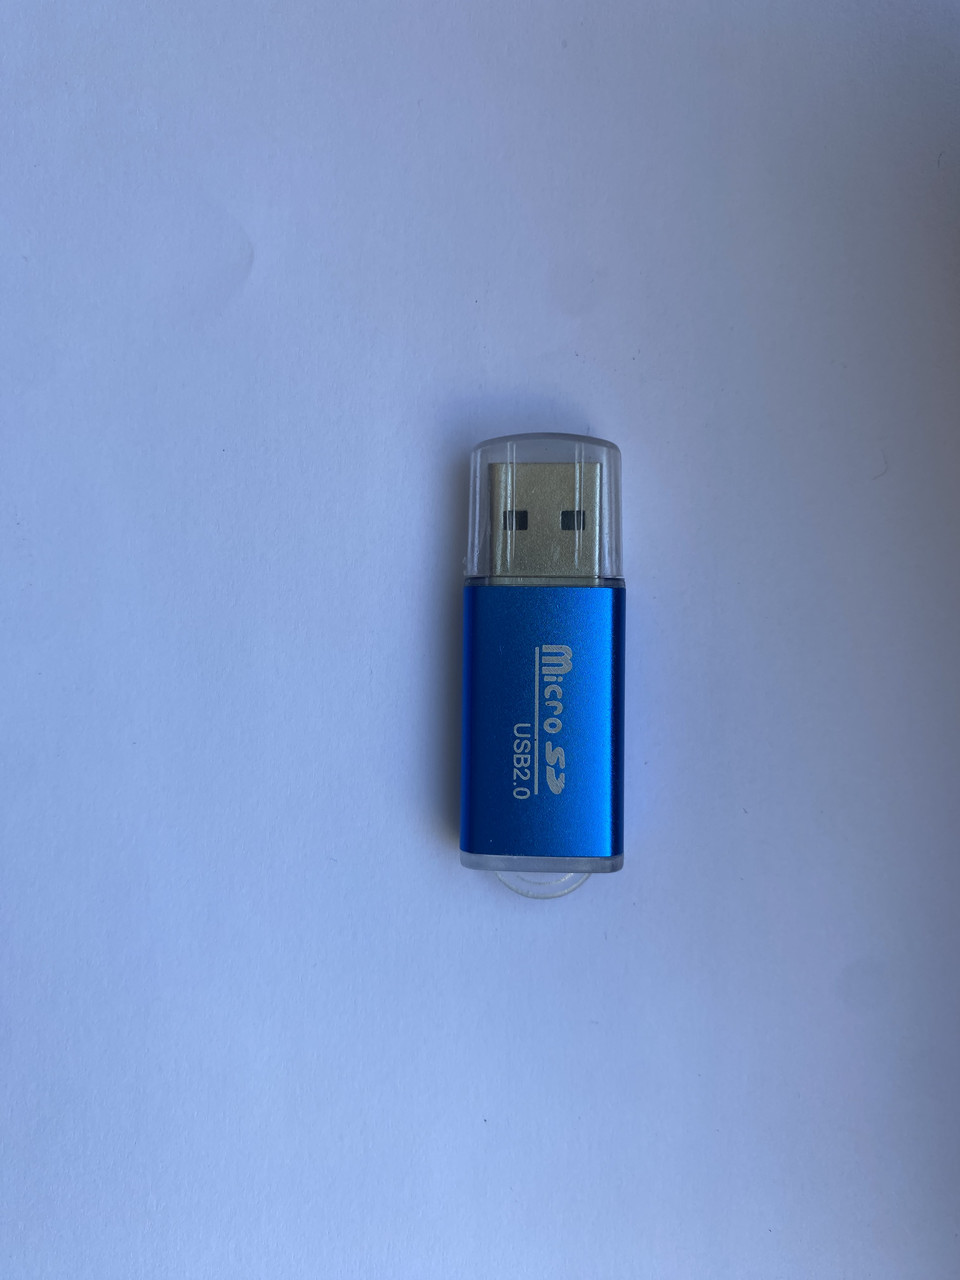 Кардридер USB 2.0 MicroSD